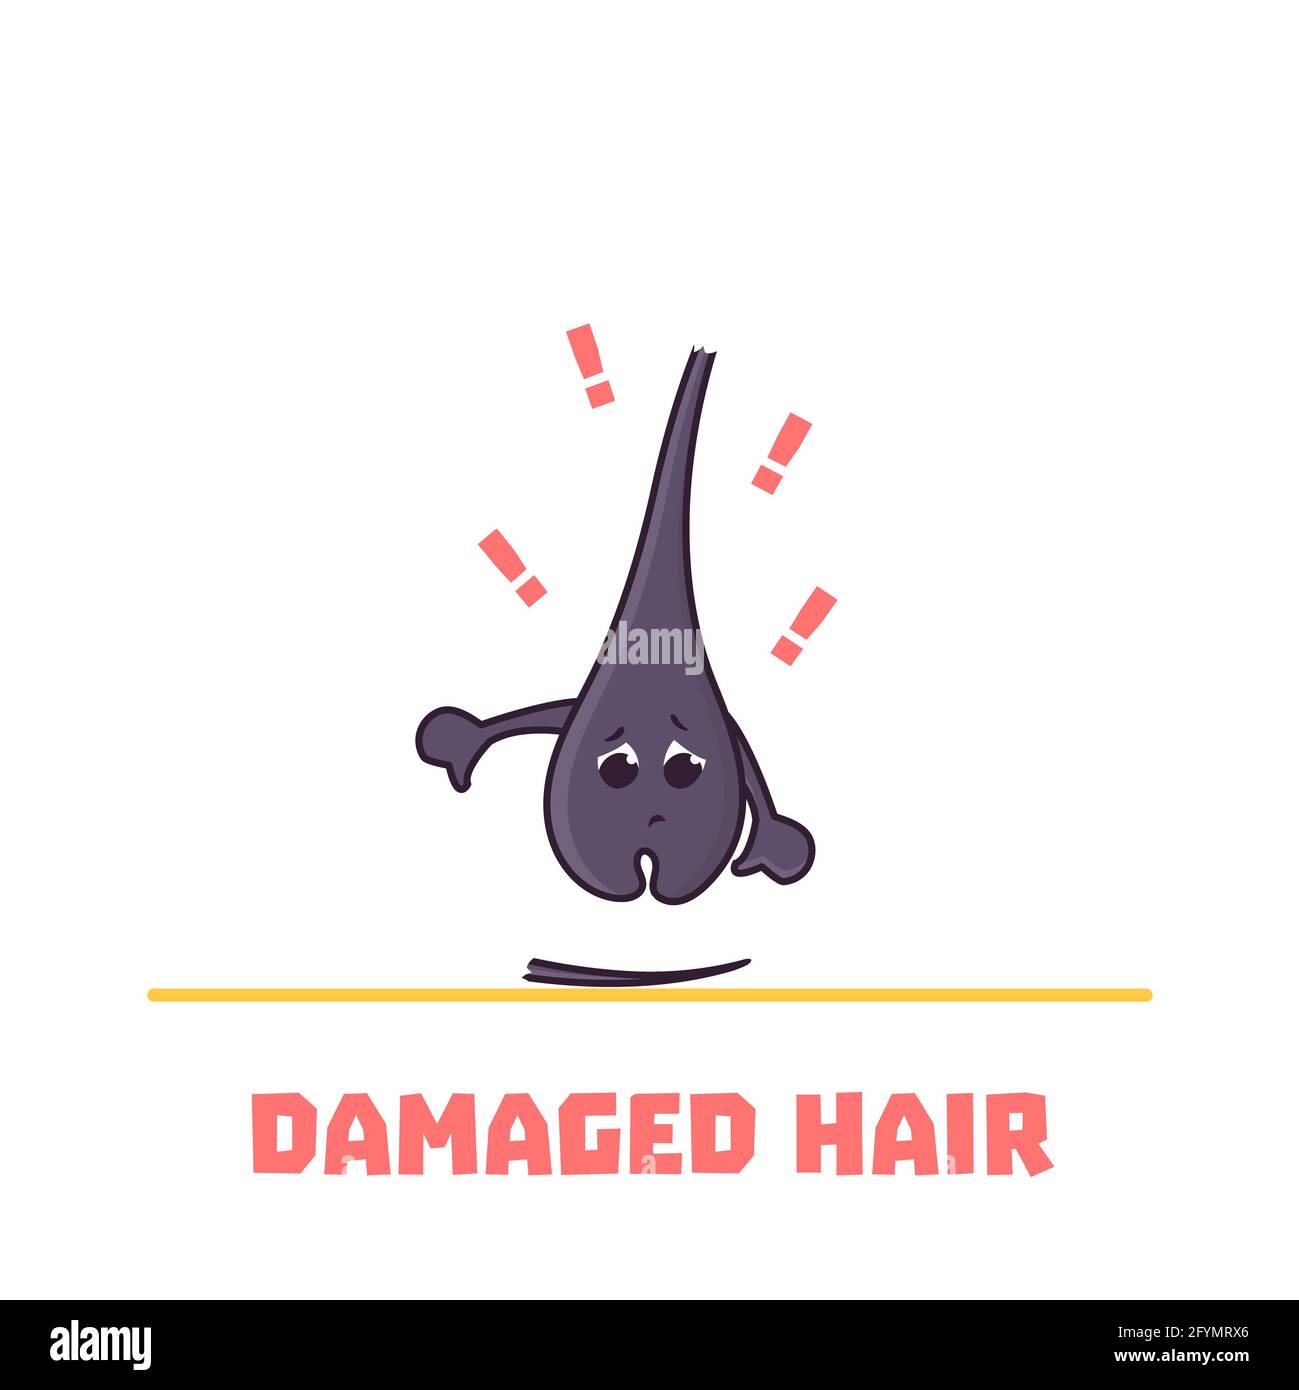 Damaged hair, conceptual illustration Stock Photo